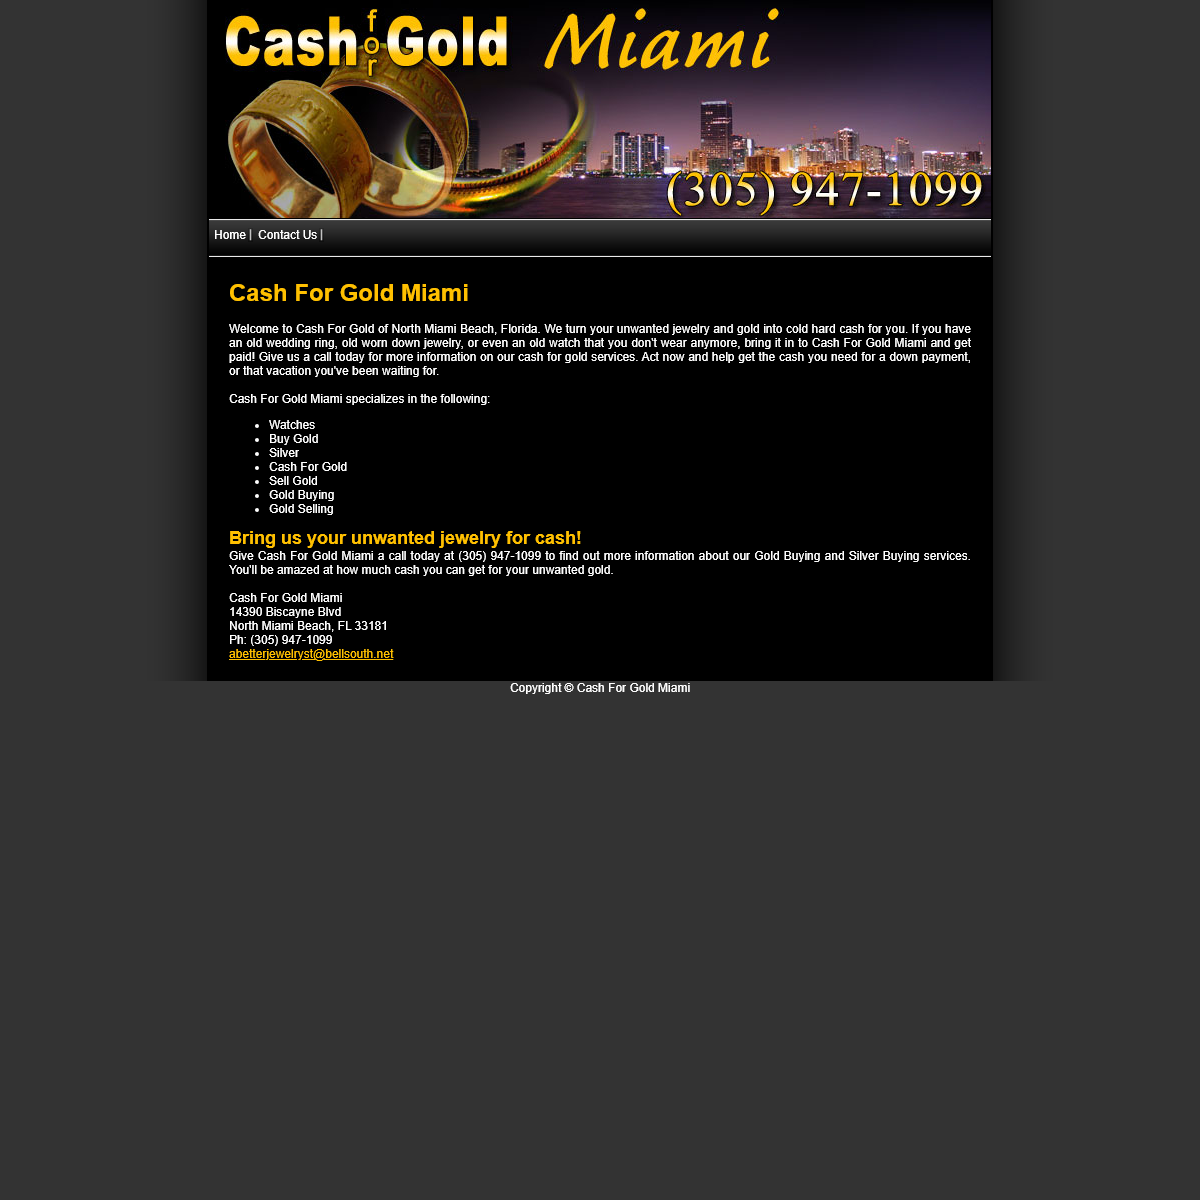 A complete backup of cash4goldnorthmiami.com